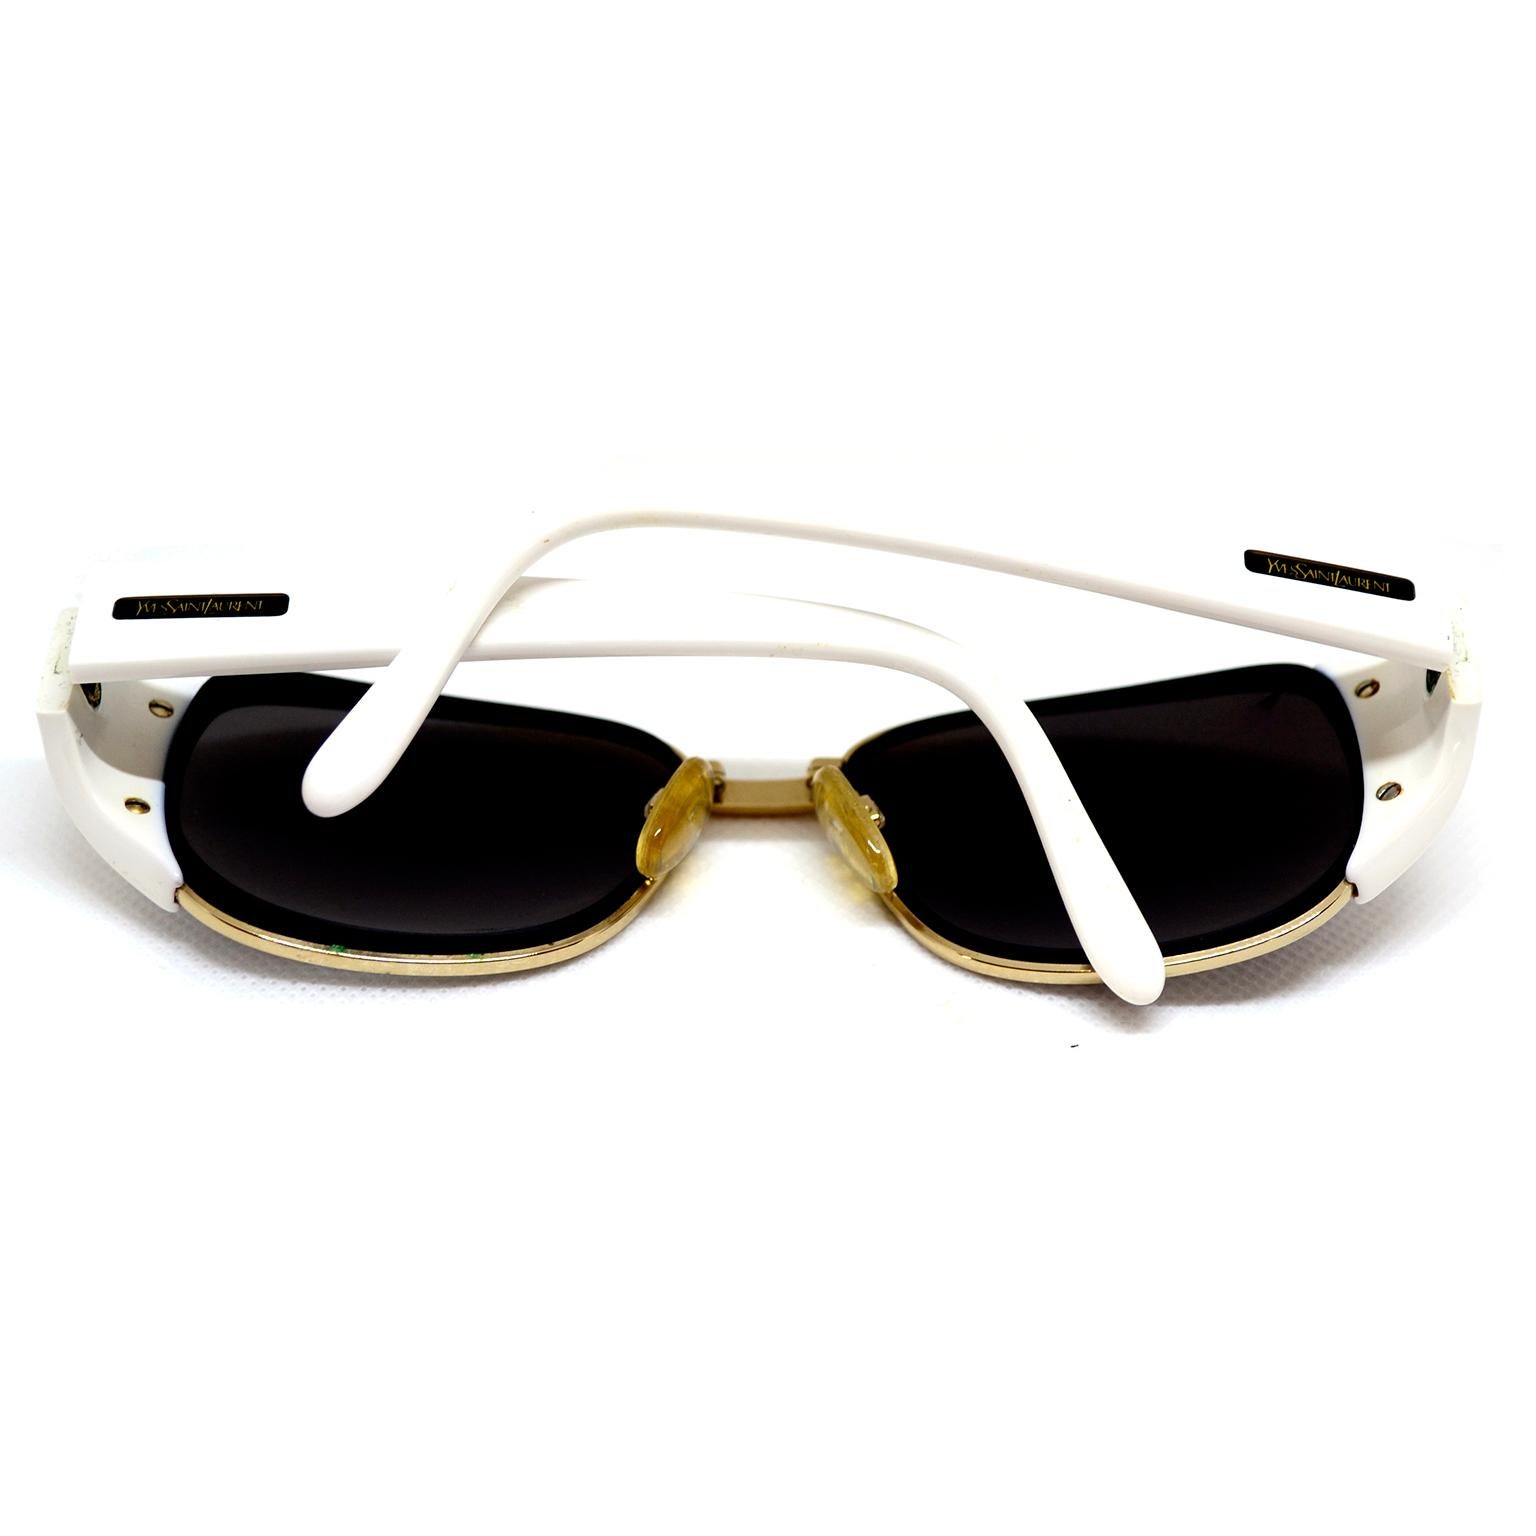 Yves Saint Laurent White and Gold Eyewear Frames Vintage YSL Sunglasses 2